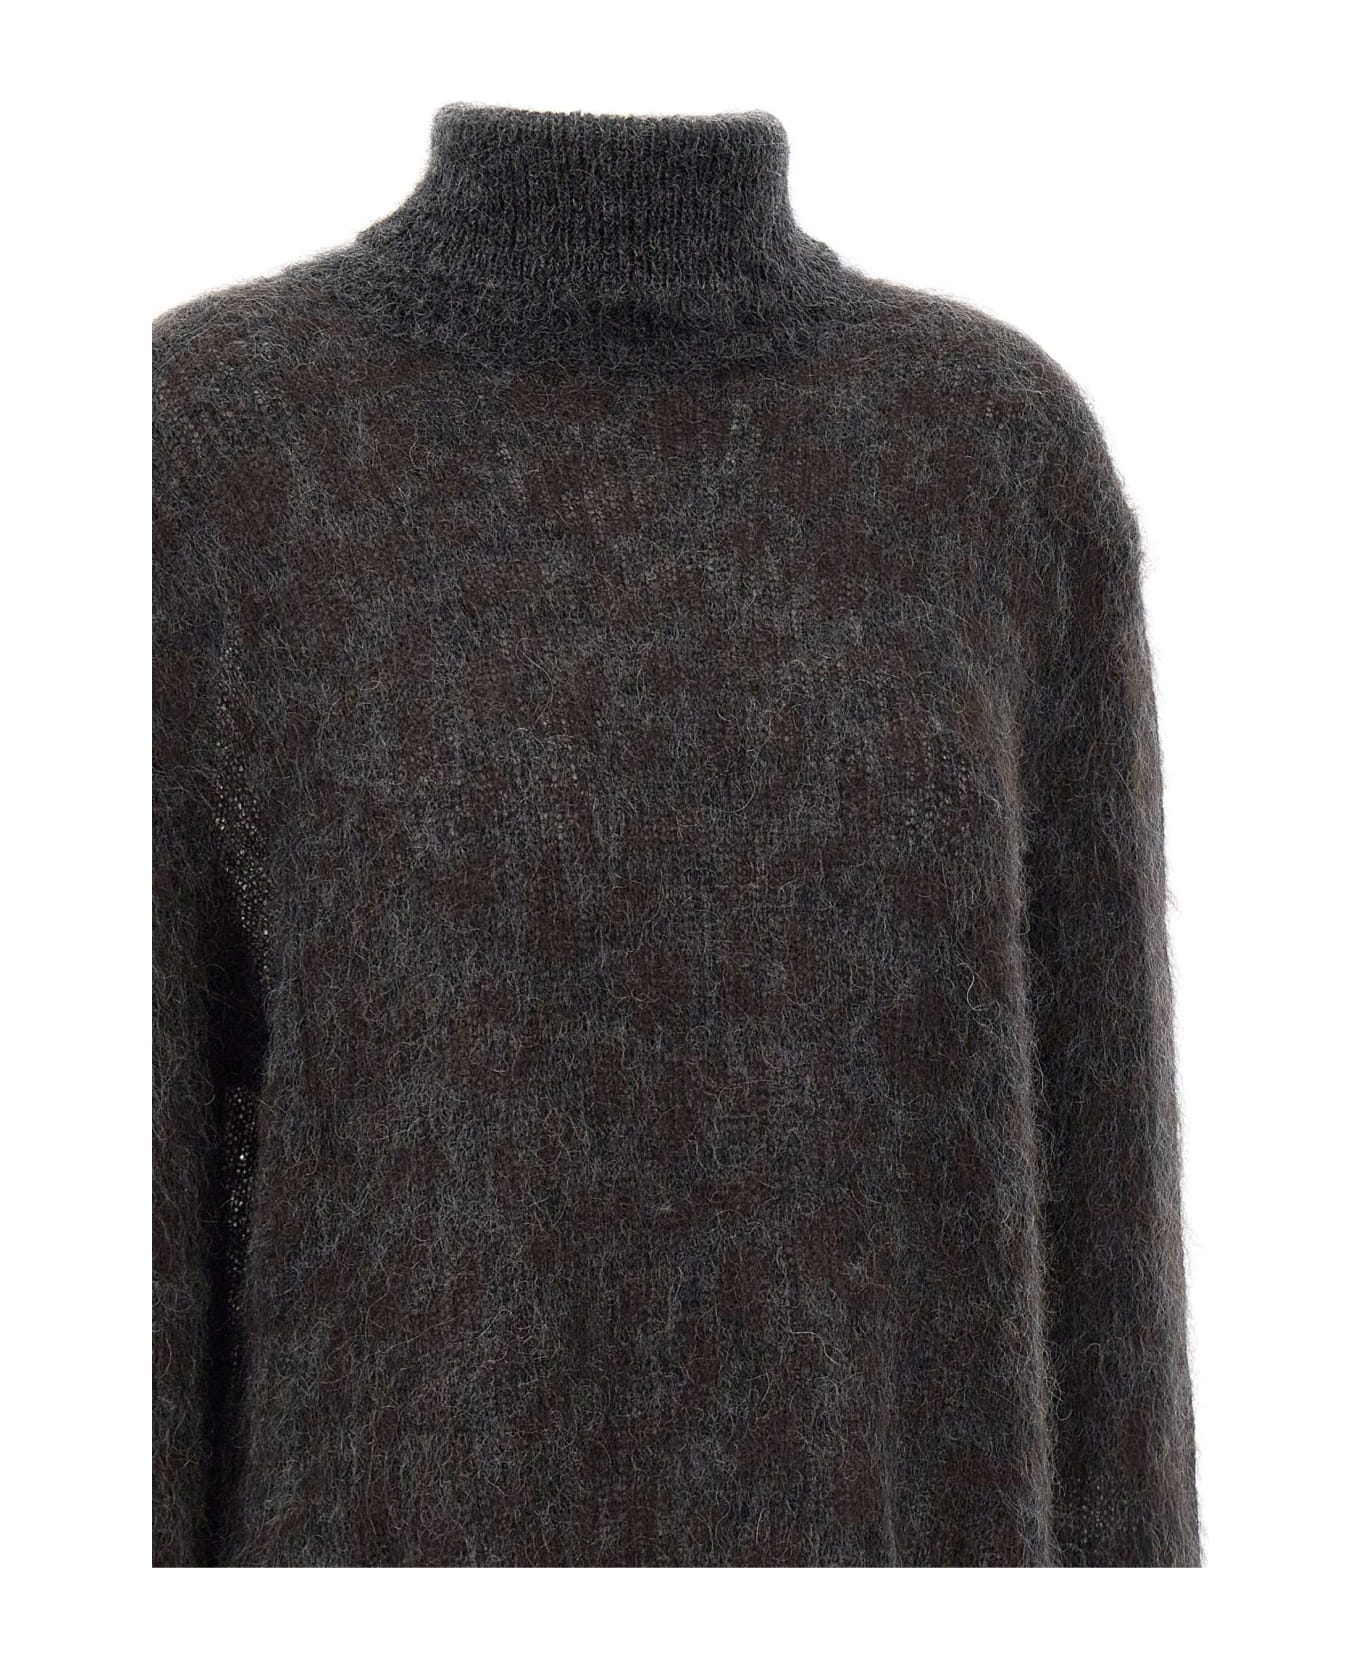 Parosh 'liam' Wool And Mohair Sweater - Fantasy Dark Grey